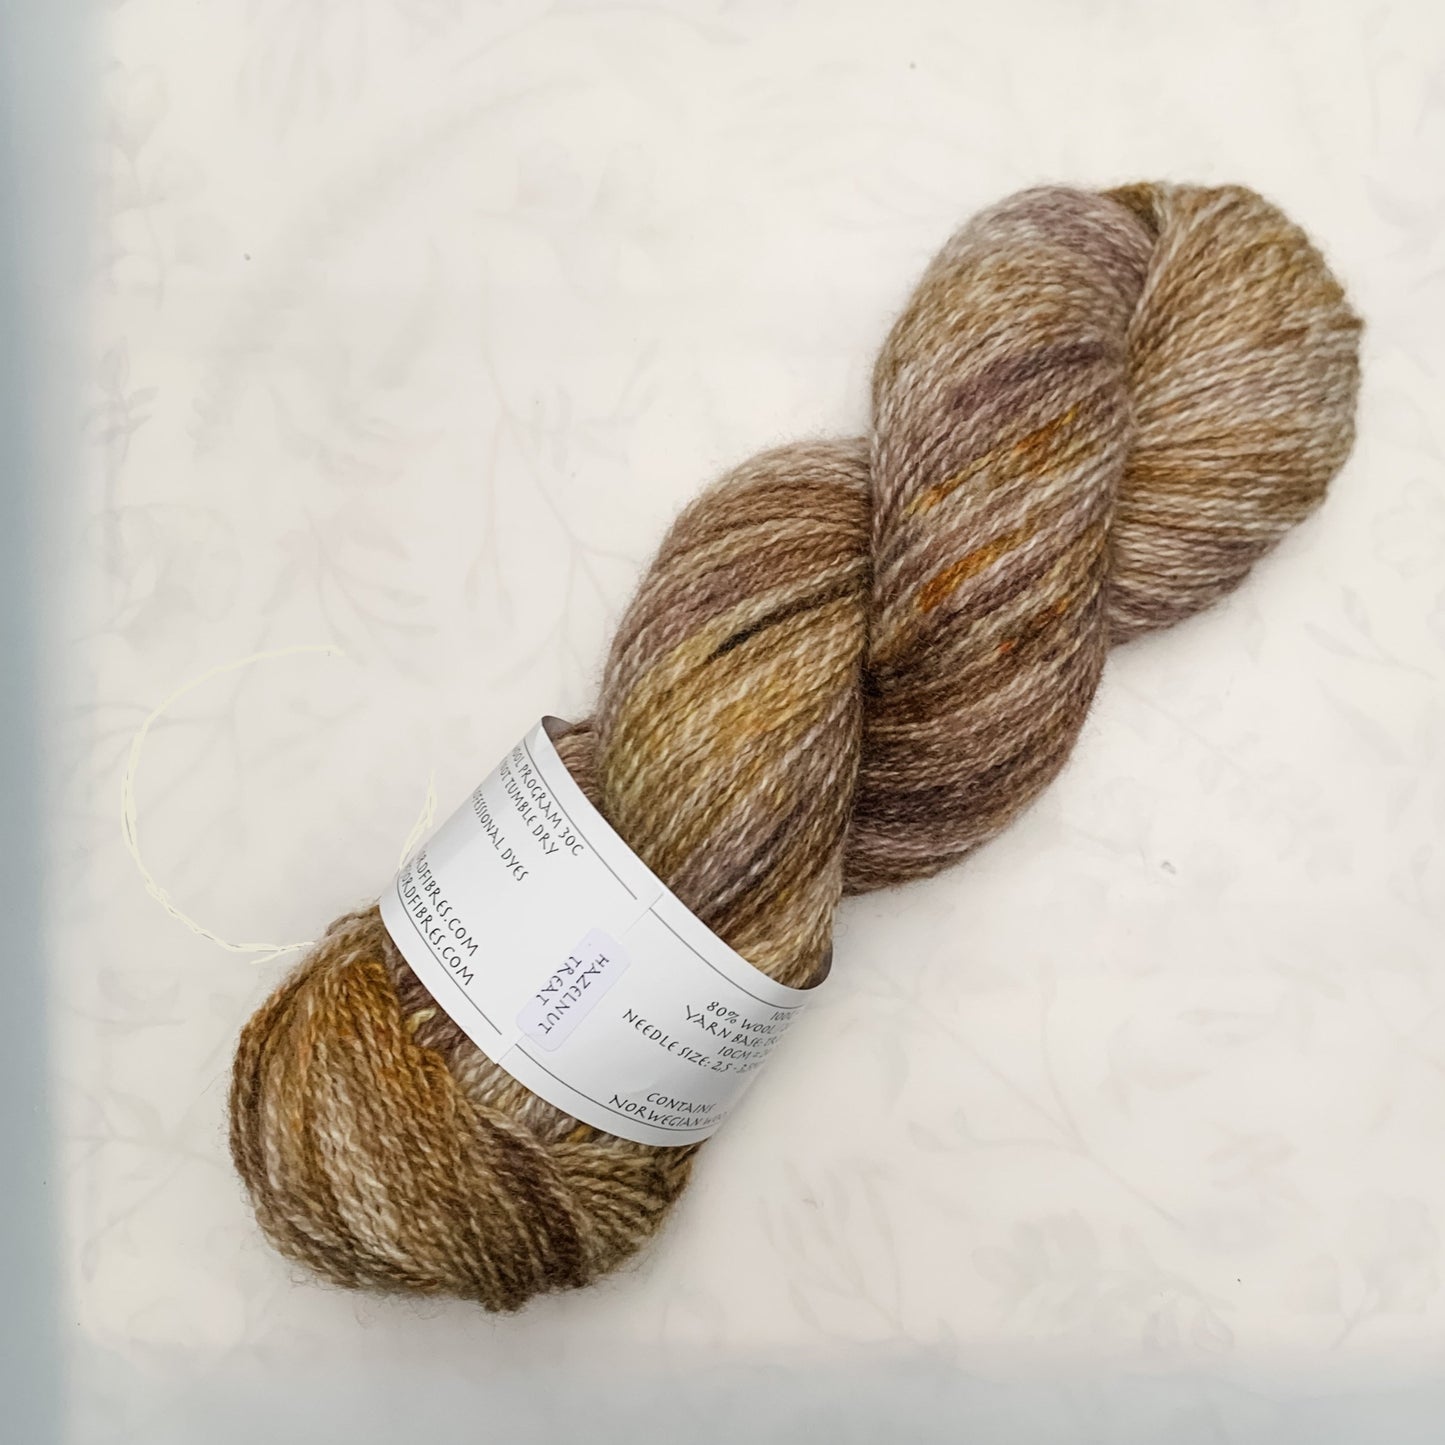 Hazelnut Treat - Trollfjord sock - Variegated Yarn - Hand dyed yarn